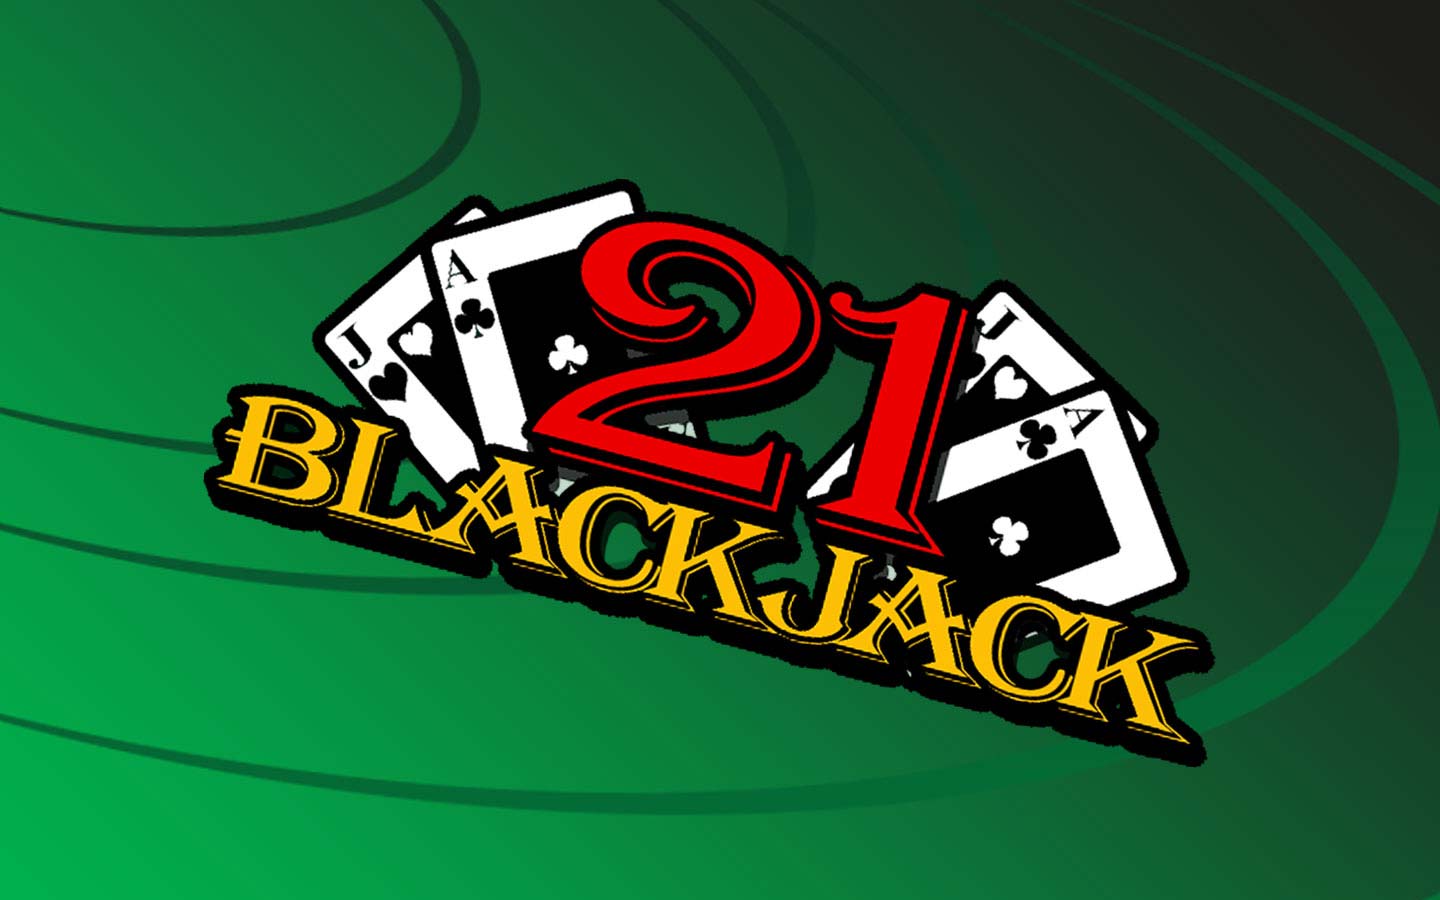 Play Blackjack games at Raging Bull casino